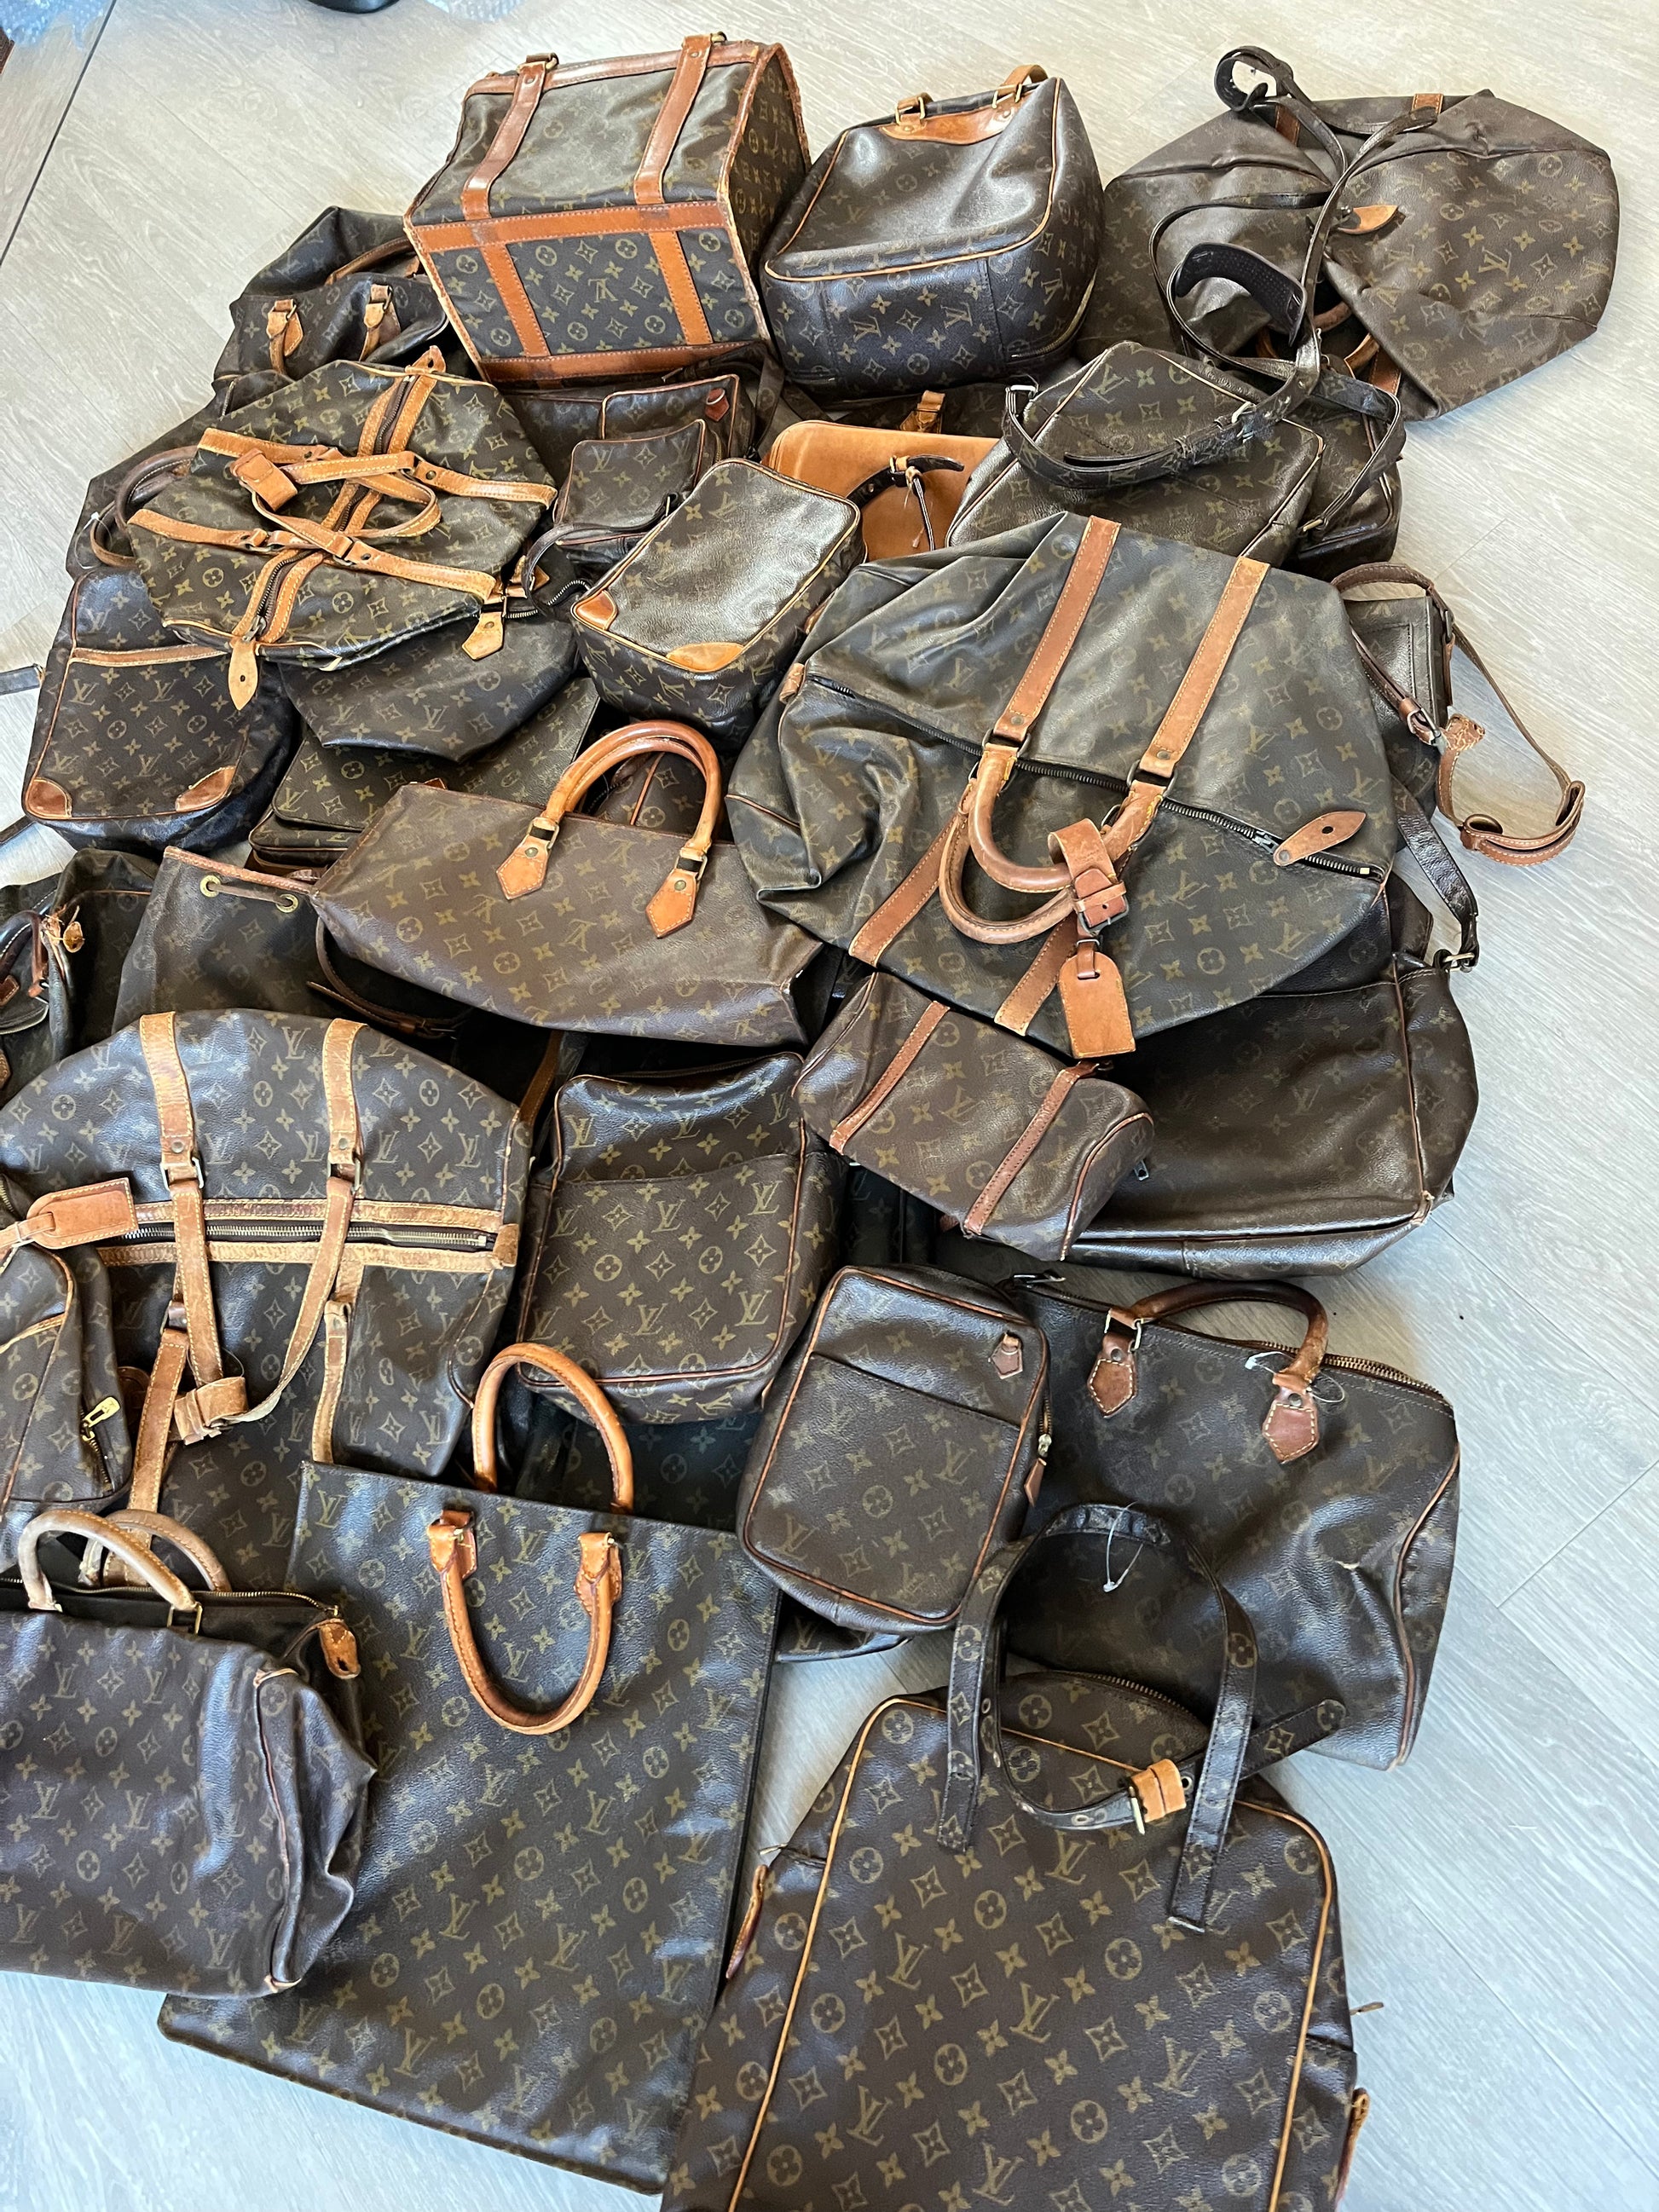 Louis Vuitton Shopping Bag into Purse Wholesale